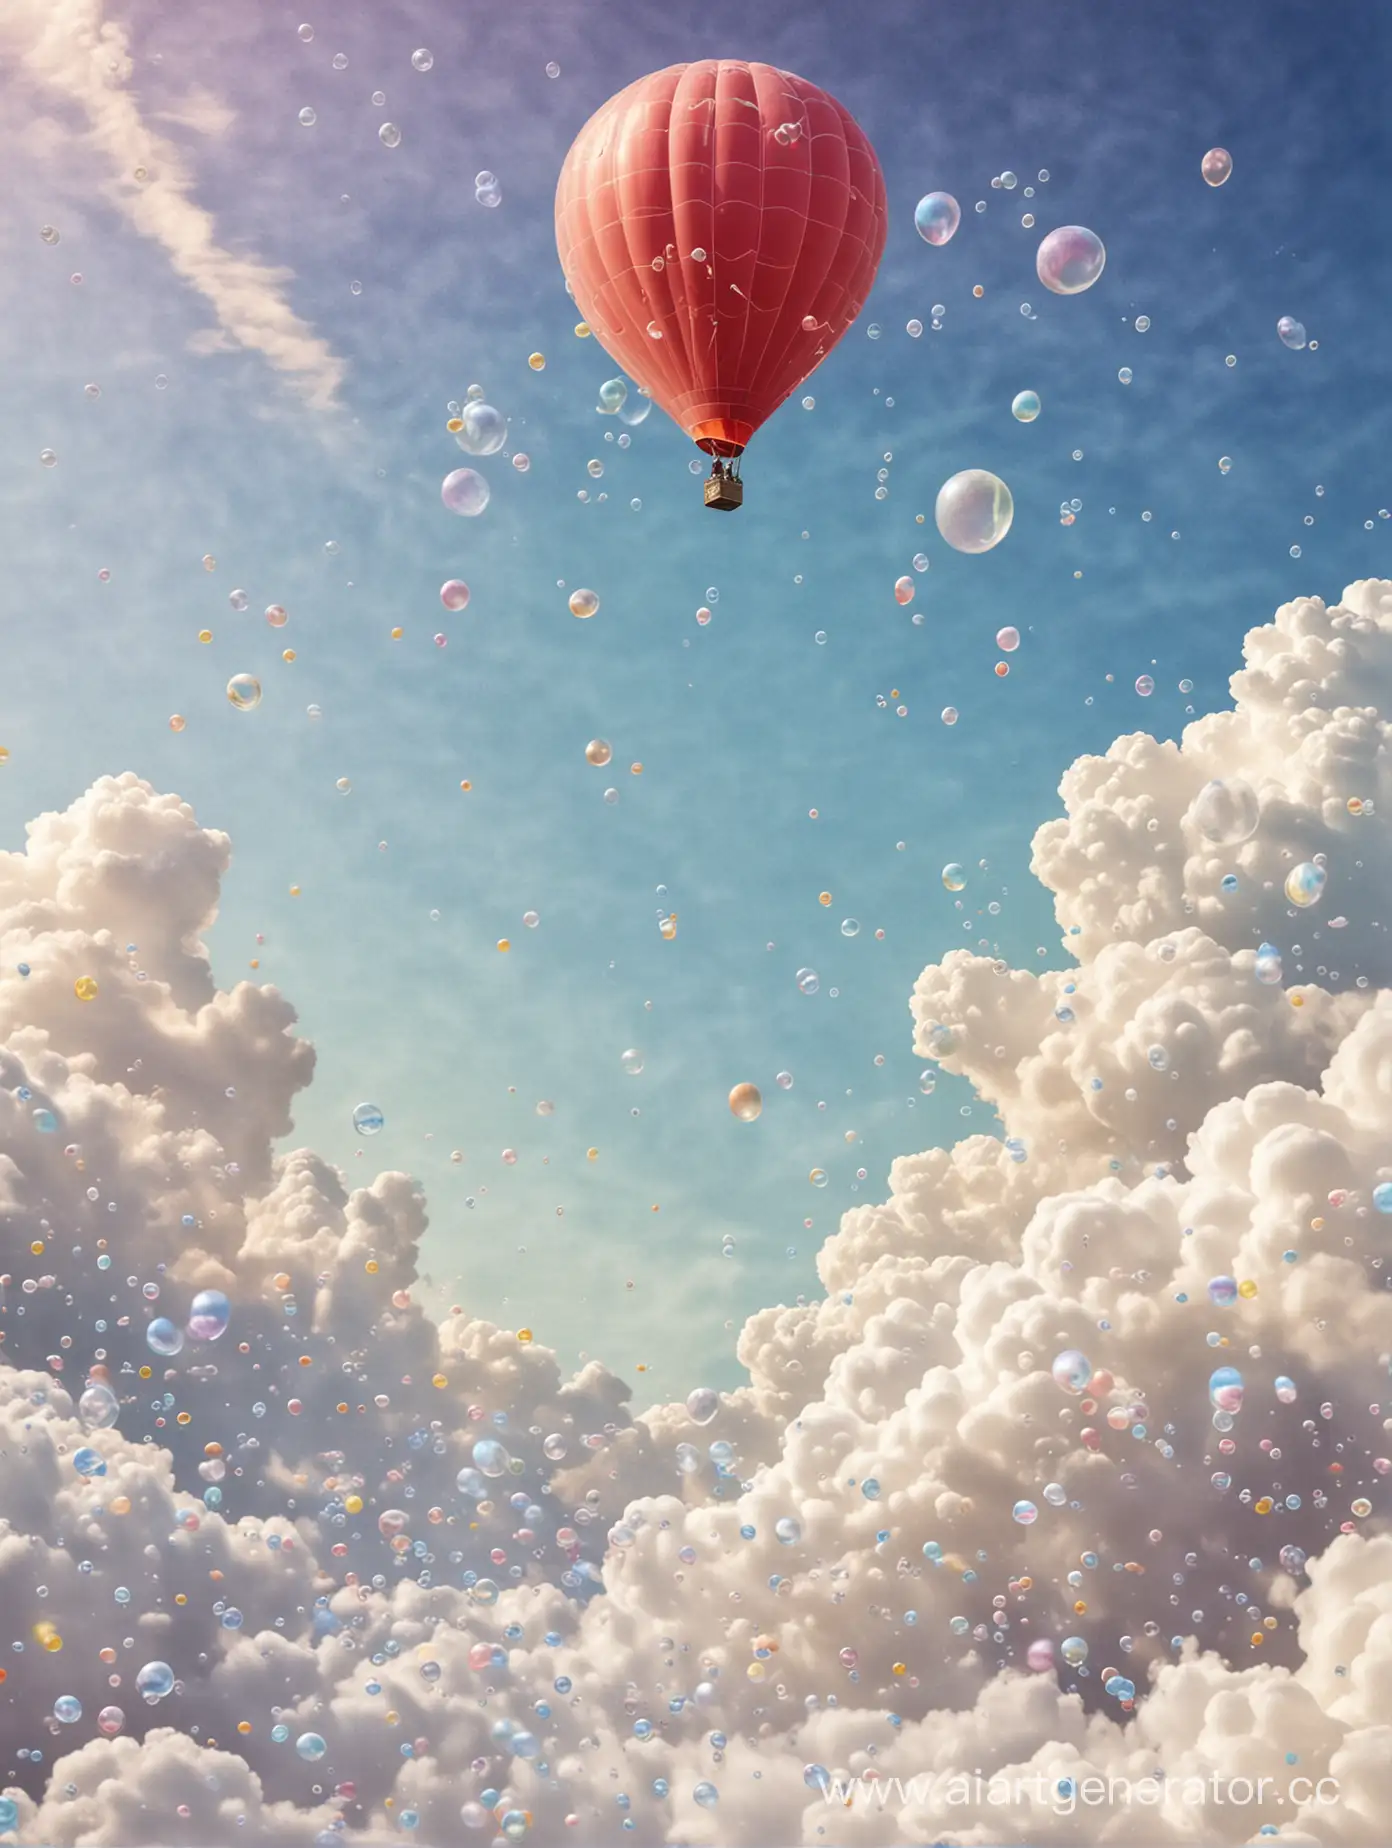 Joyful-Childhood-Moments-Hot-Air-Balloon-Adventure-and-Bubbling-Fun